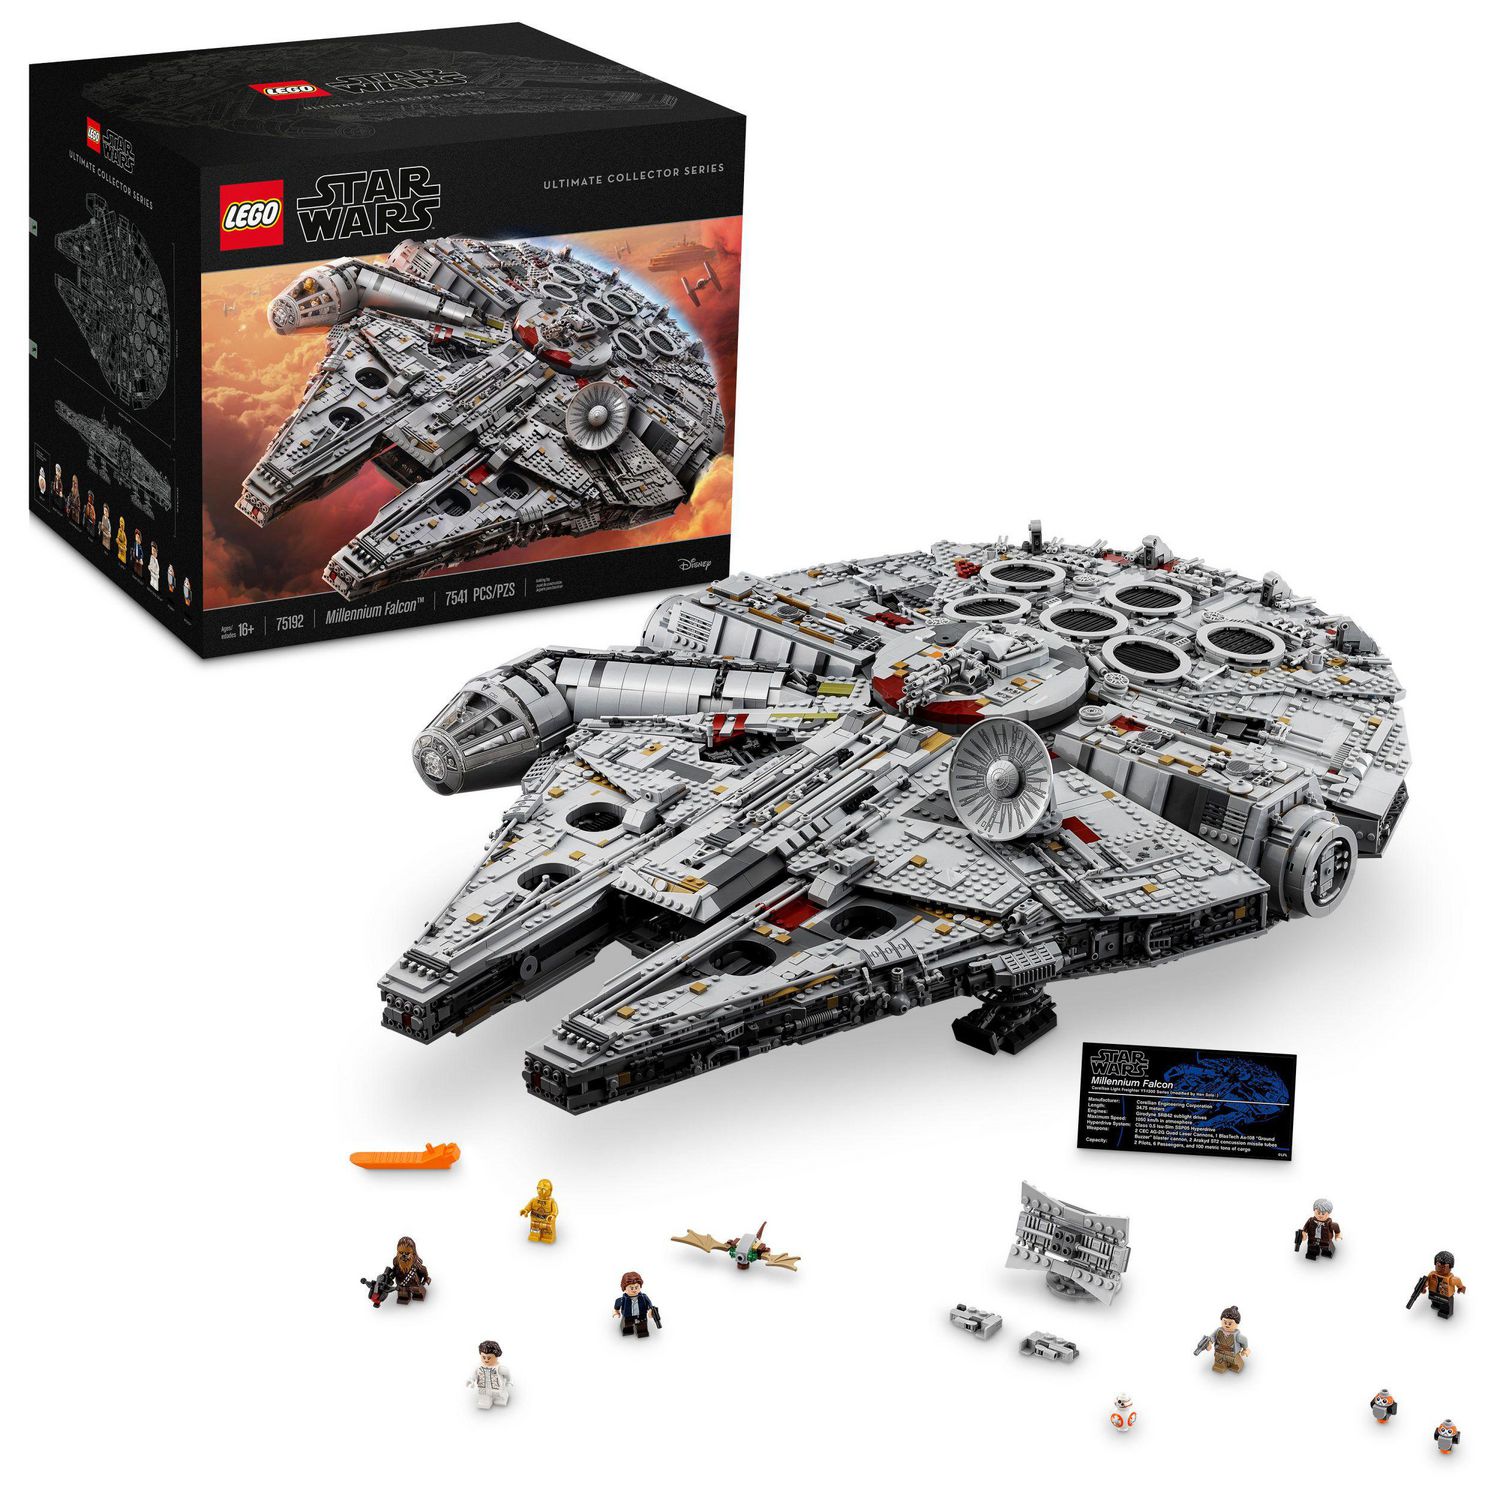 LEGO Star Wars Millennium Falcon 75192 Toy Building Kit